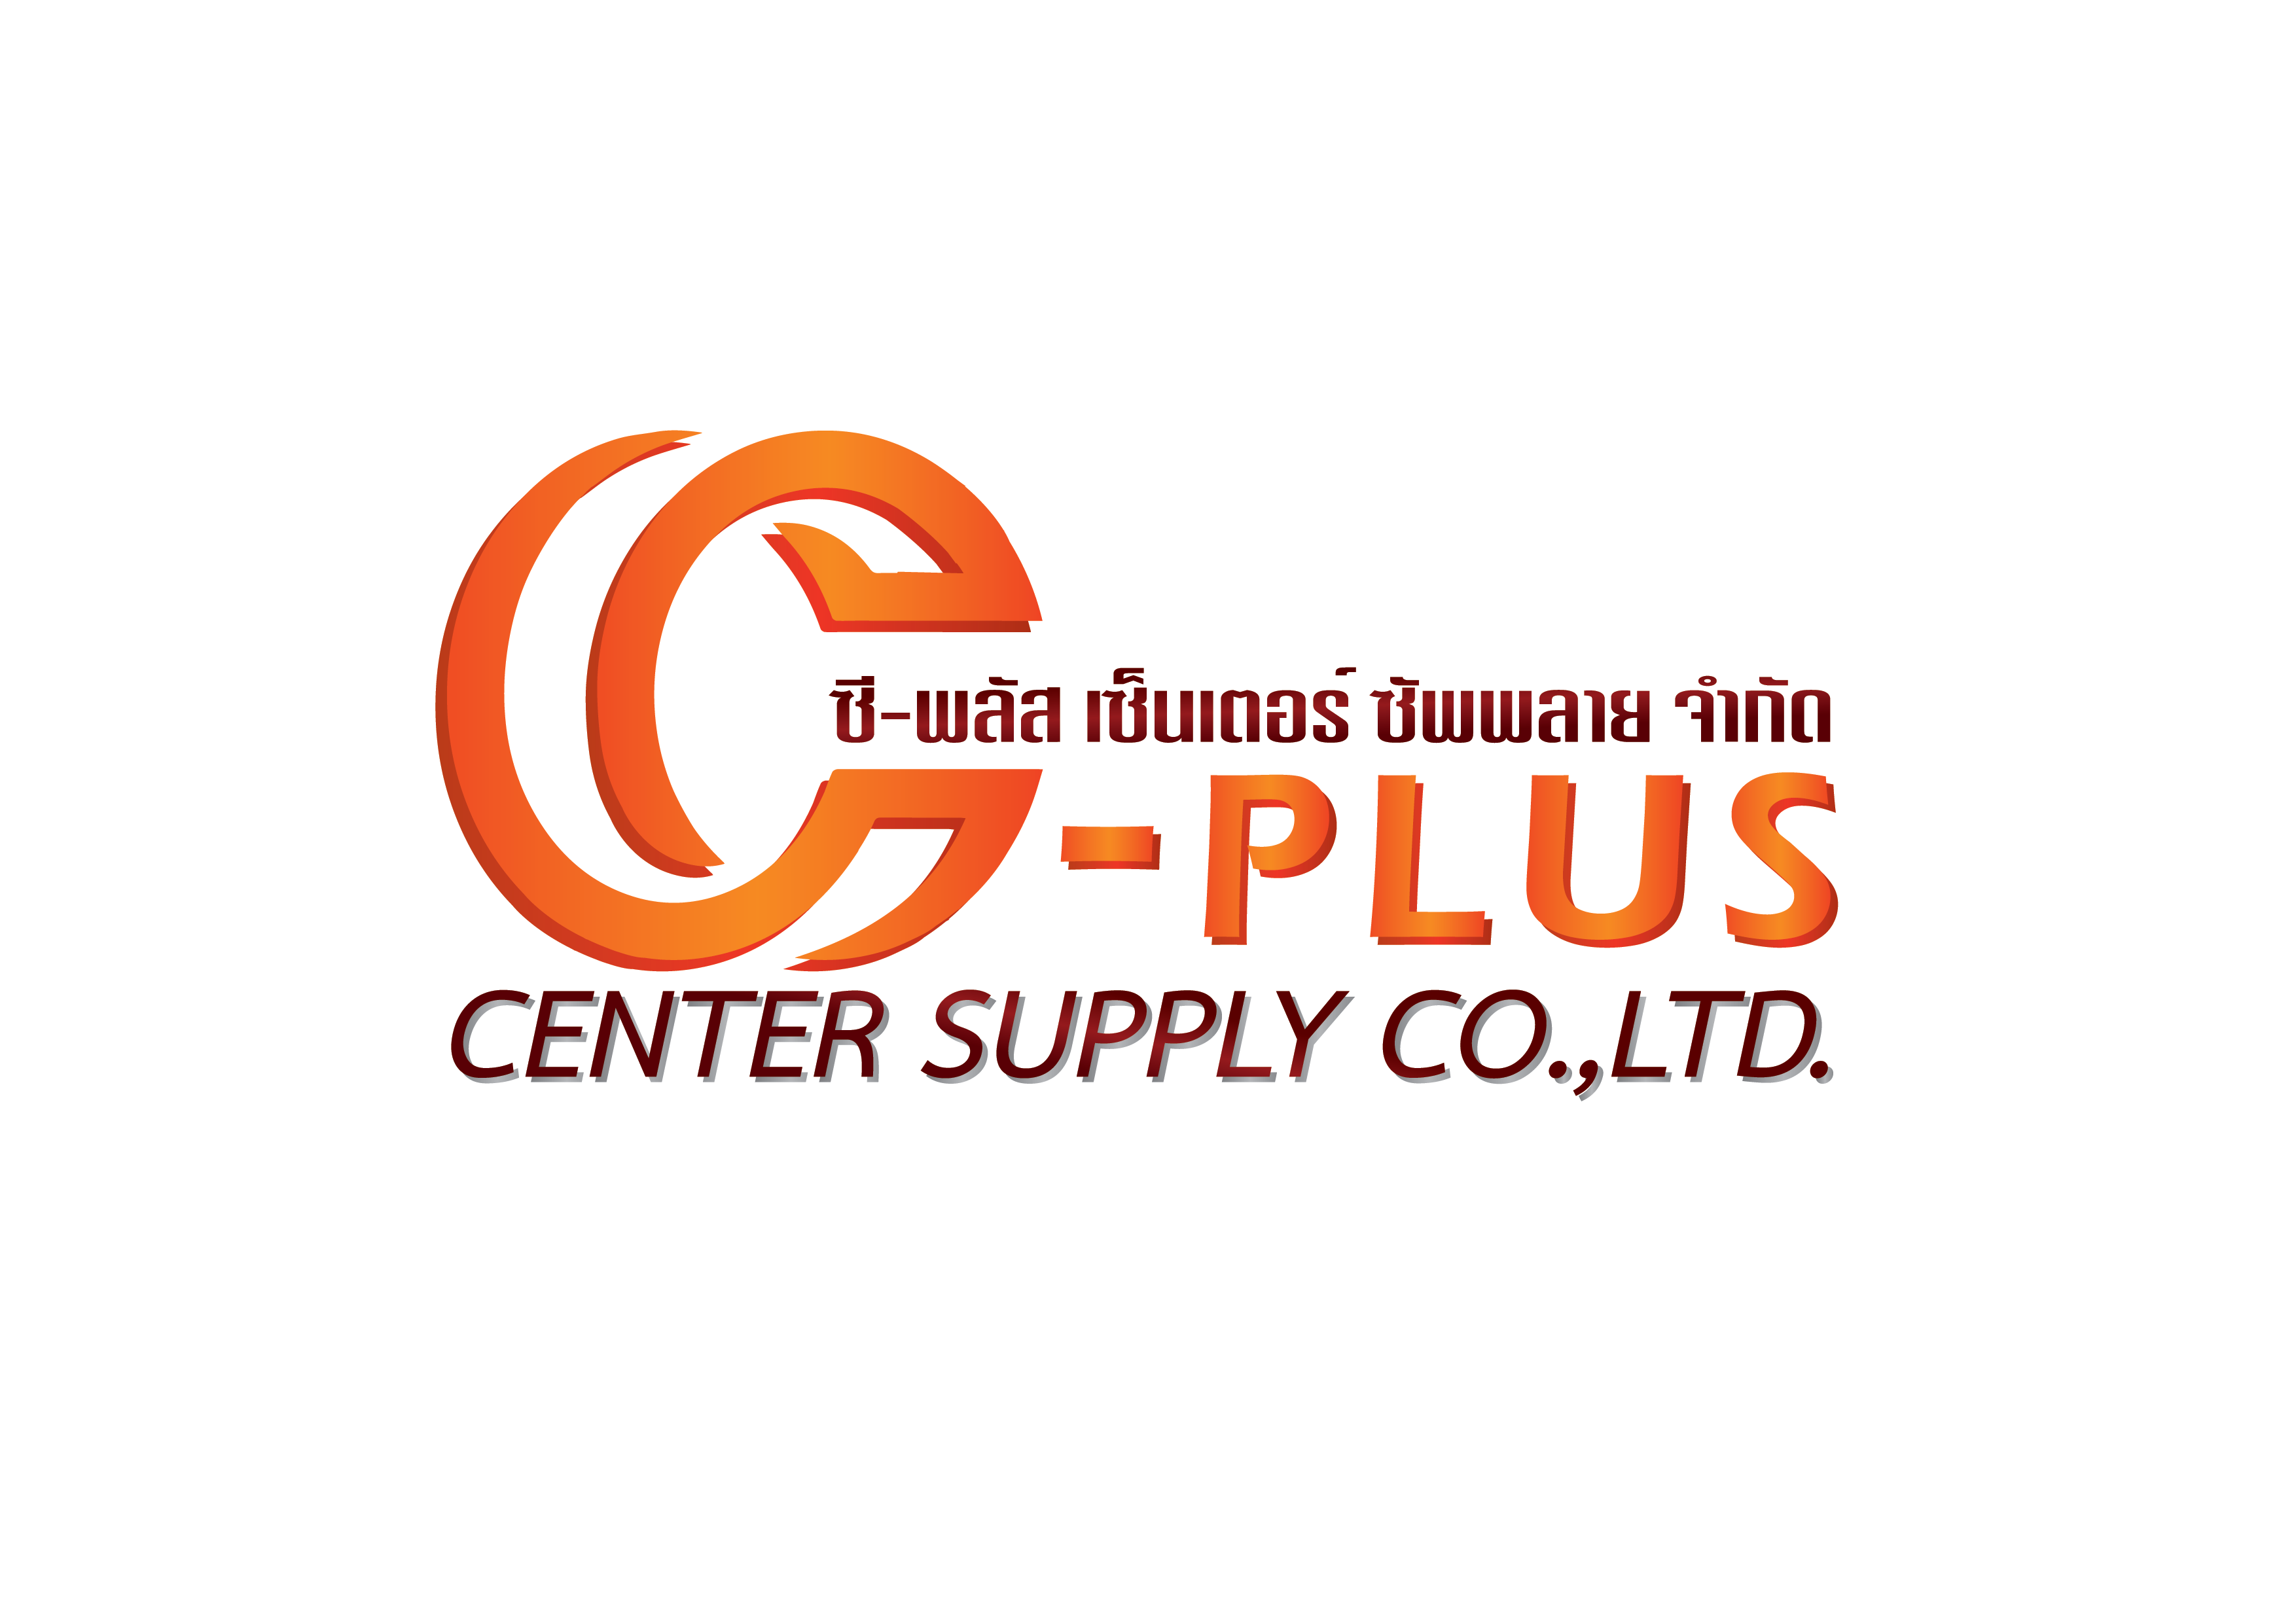 C-Plus Center Supply Co.,Ltd., บริษัท ซี-พลัส เซ็นเตอร์ ซัพพลาย จำกัด